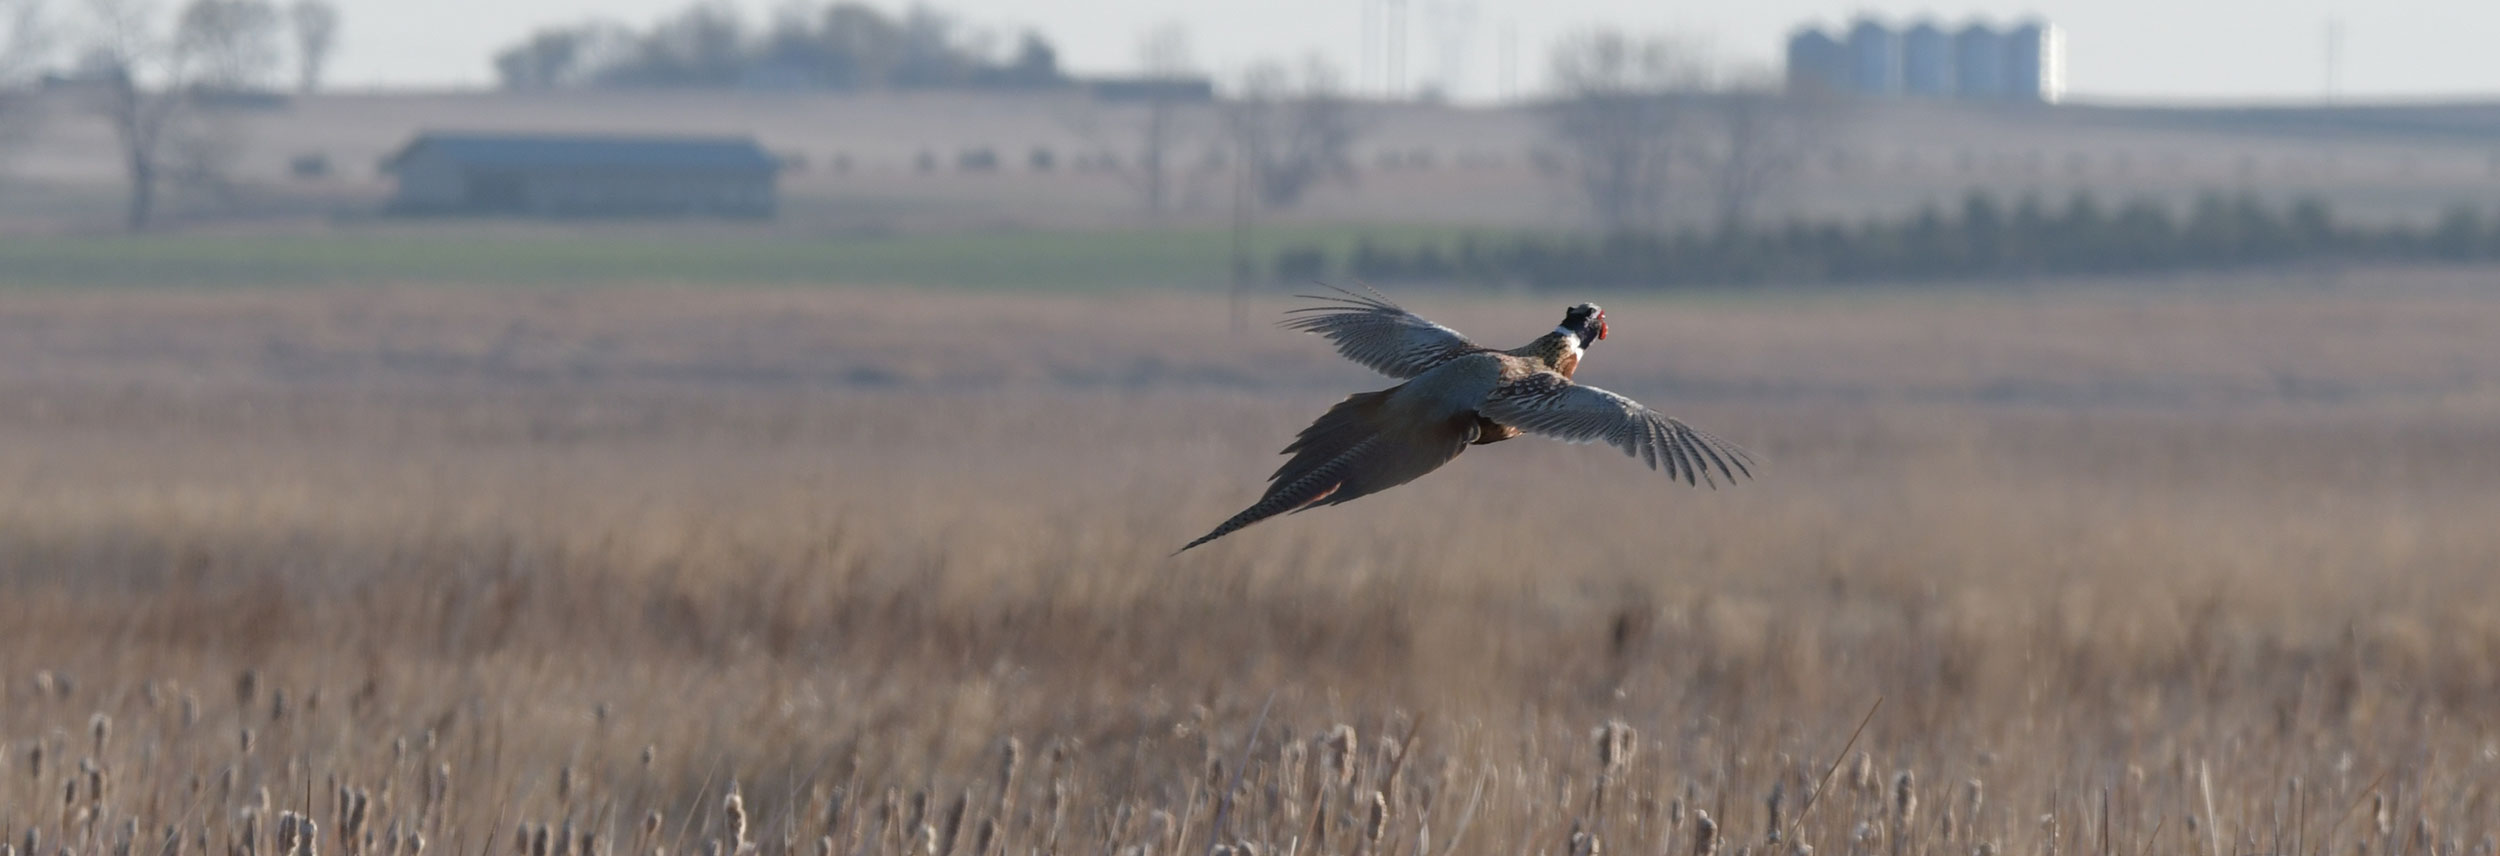 Pheasant flying